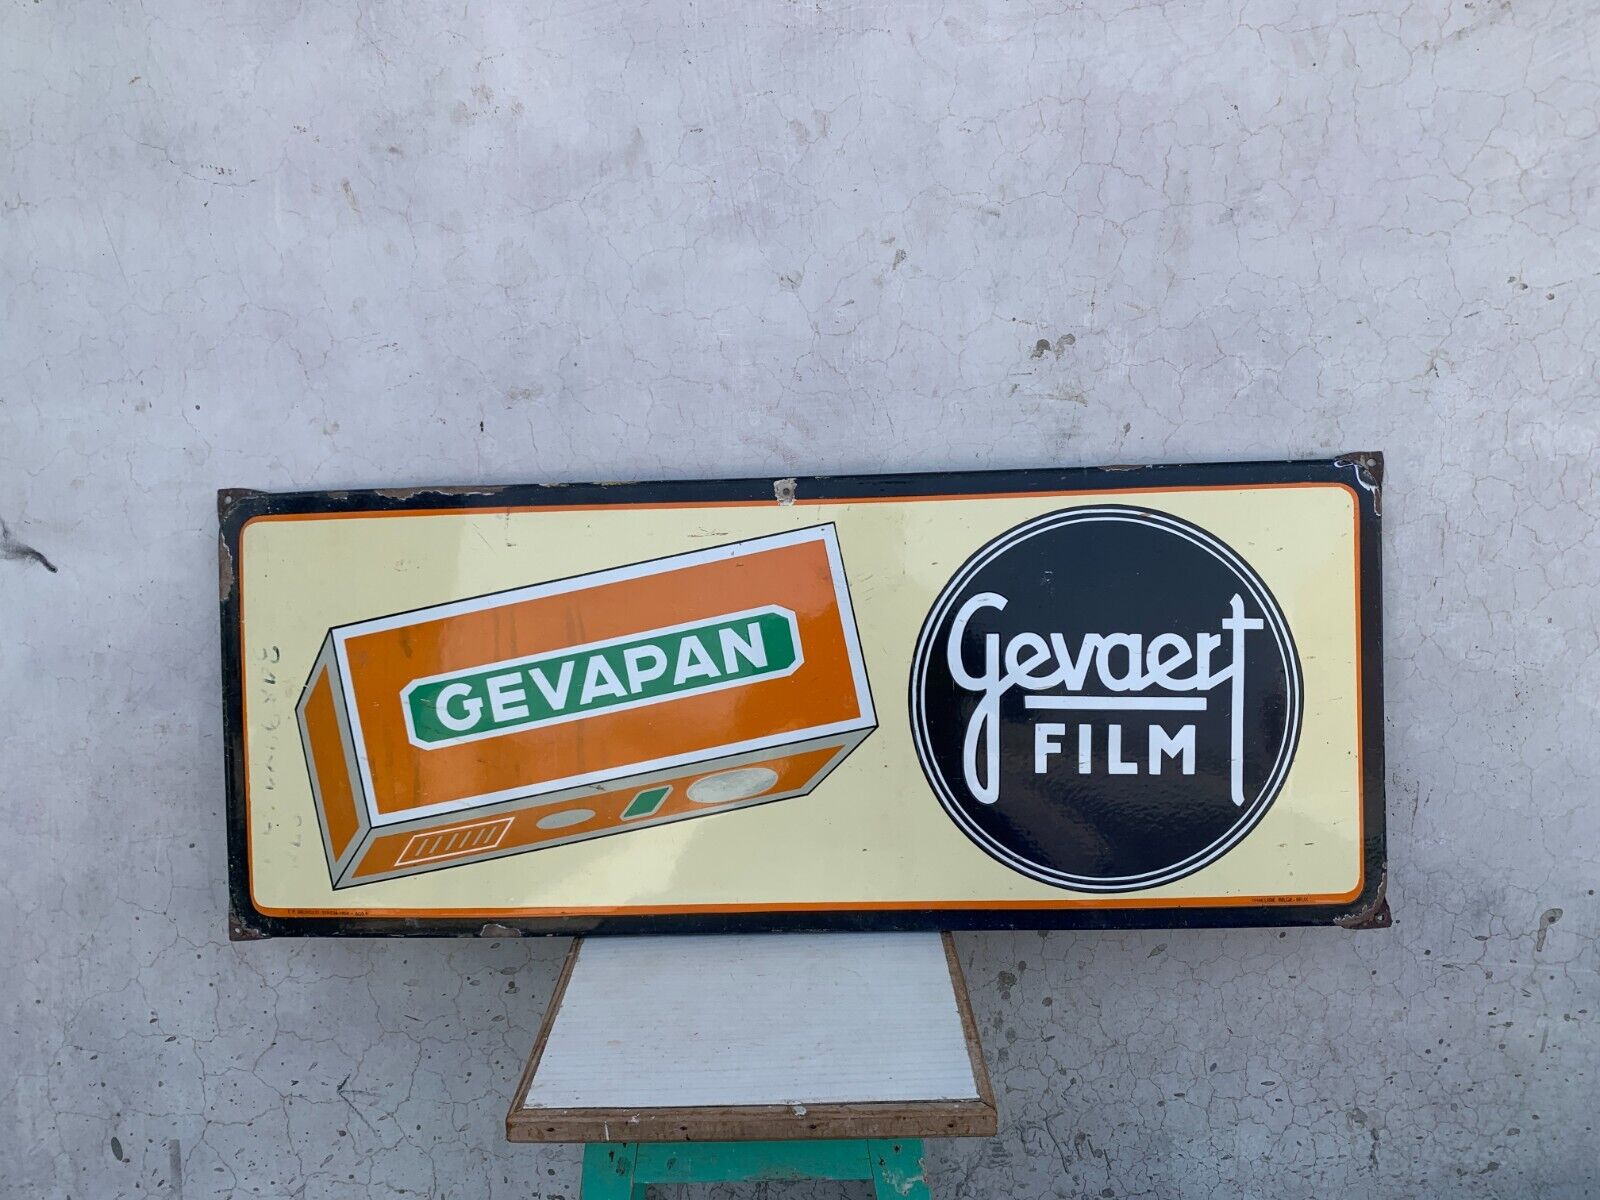 Collectible Gevapan Gevaert Film Advertisement Porcelain Enamel Tin Sign Board